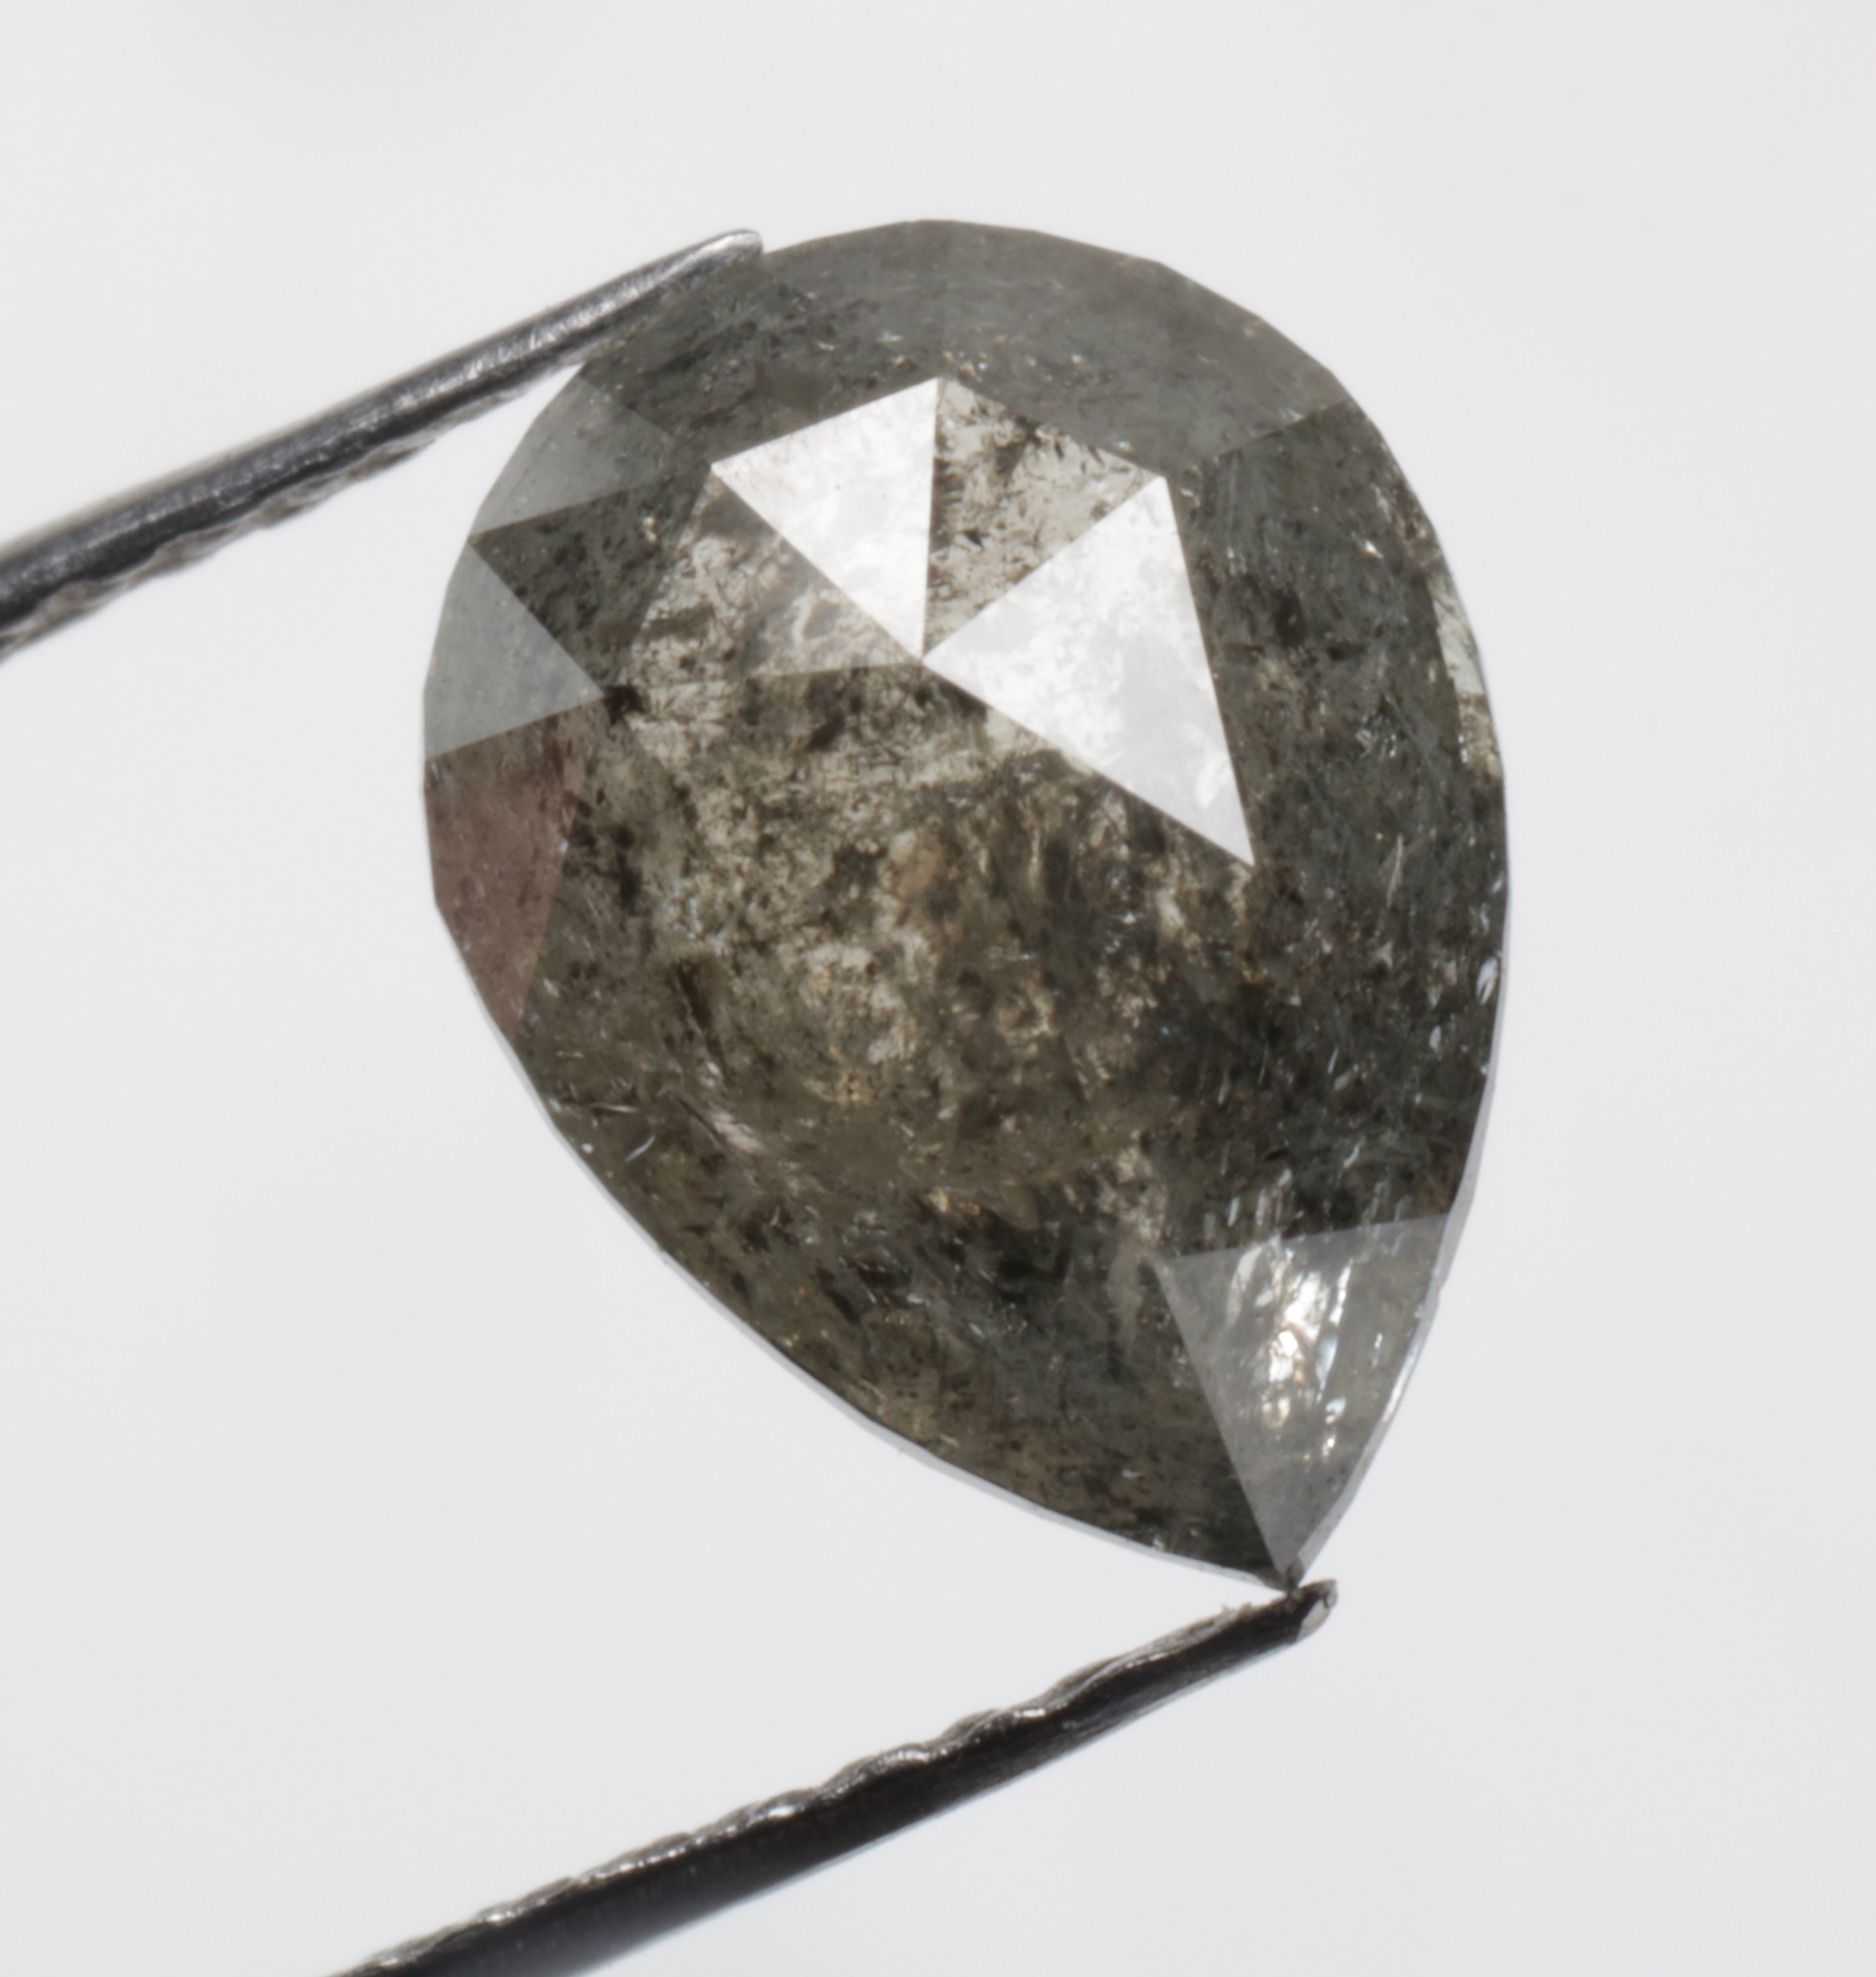 1.20 CT Natural Loose Pear Shaped Diamond